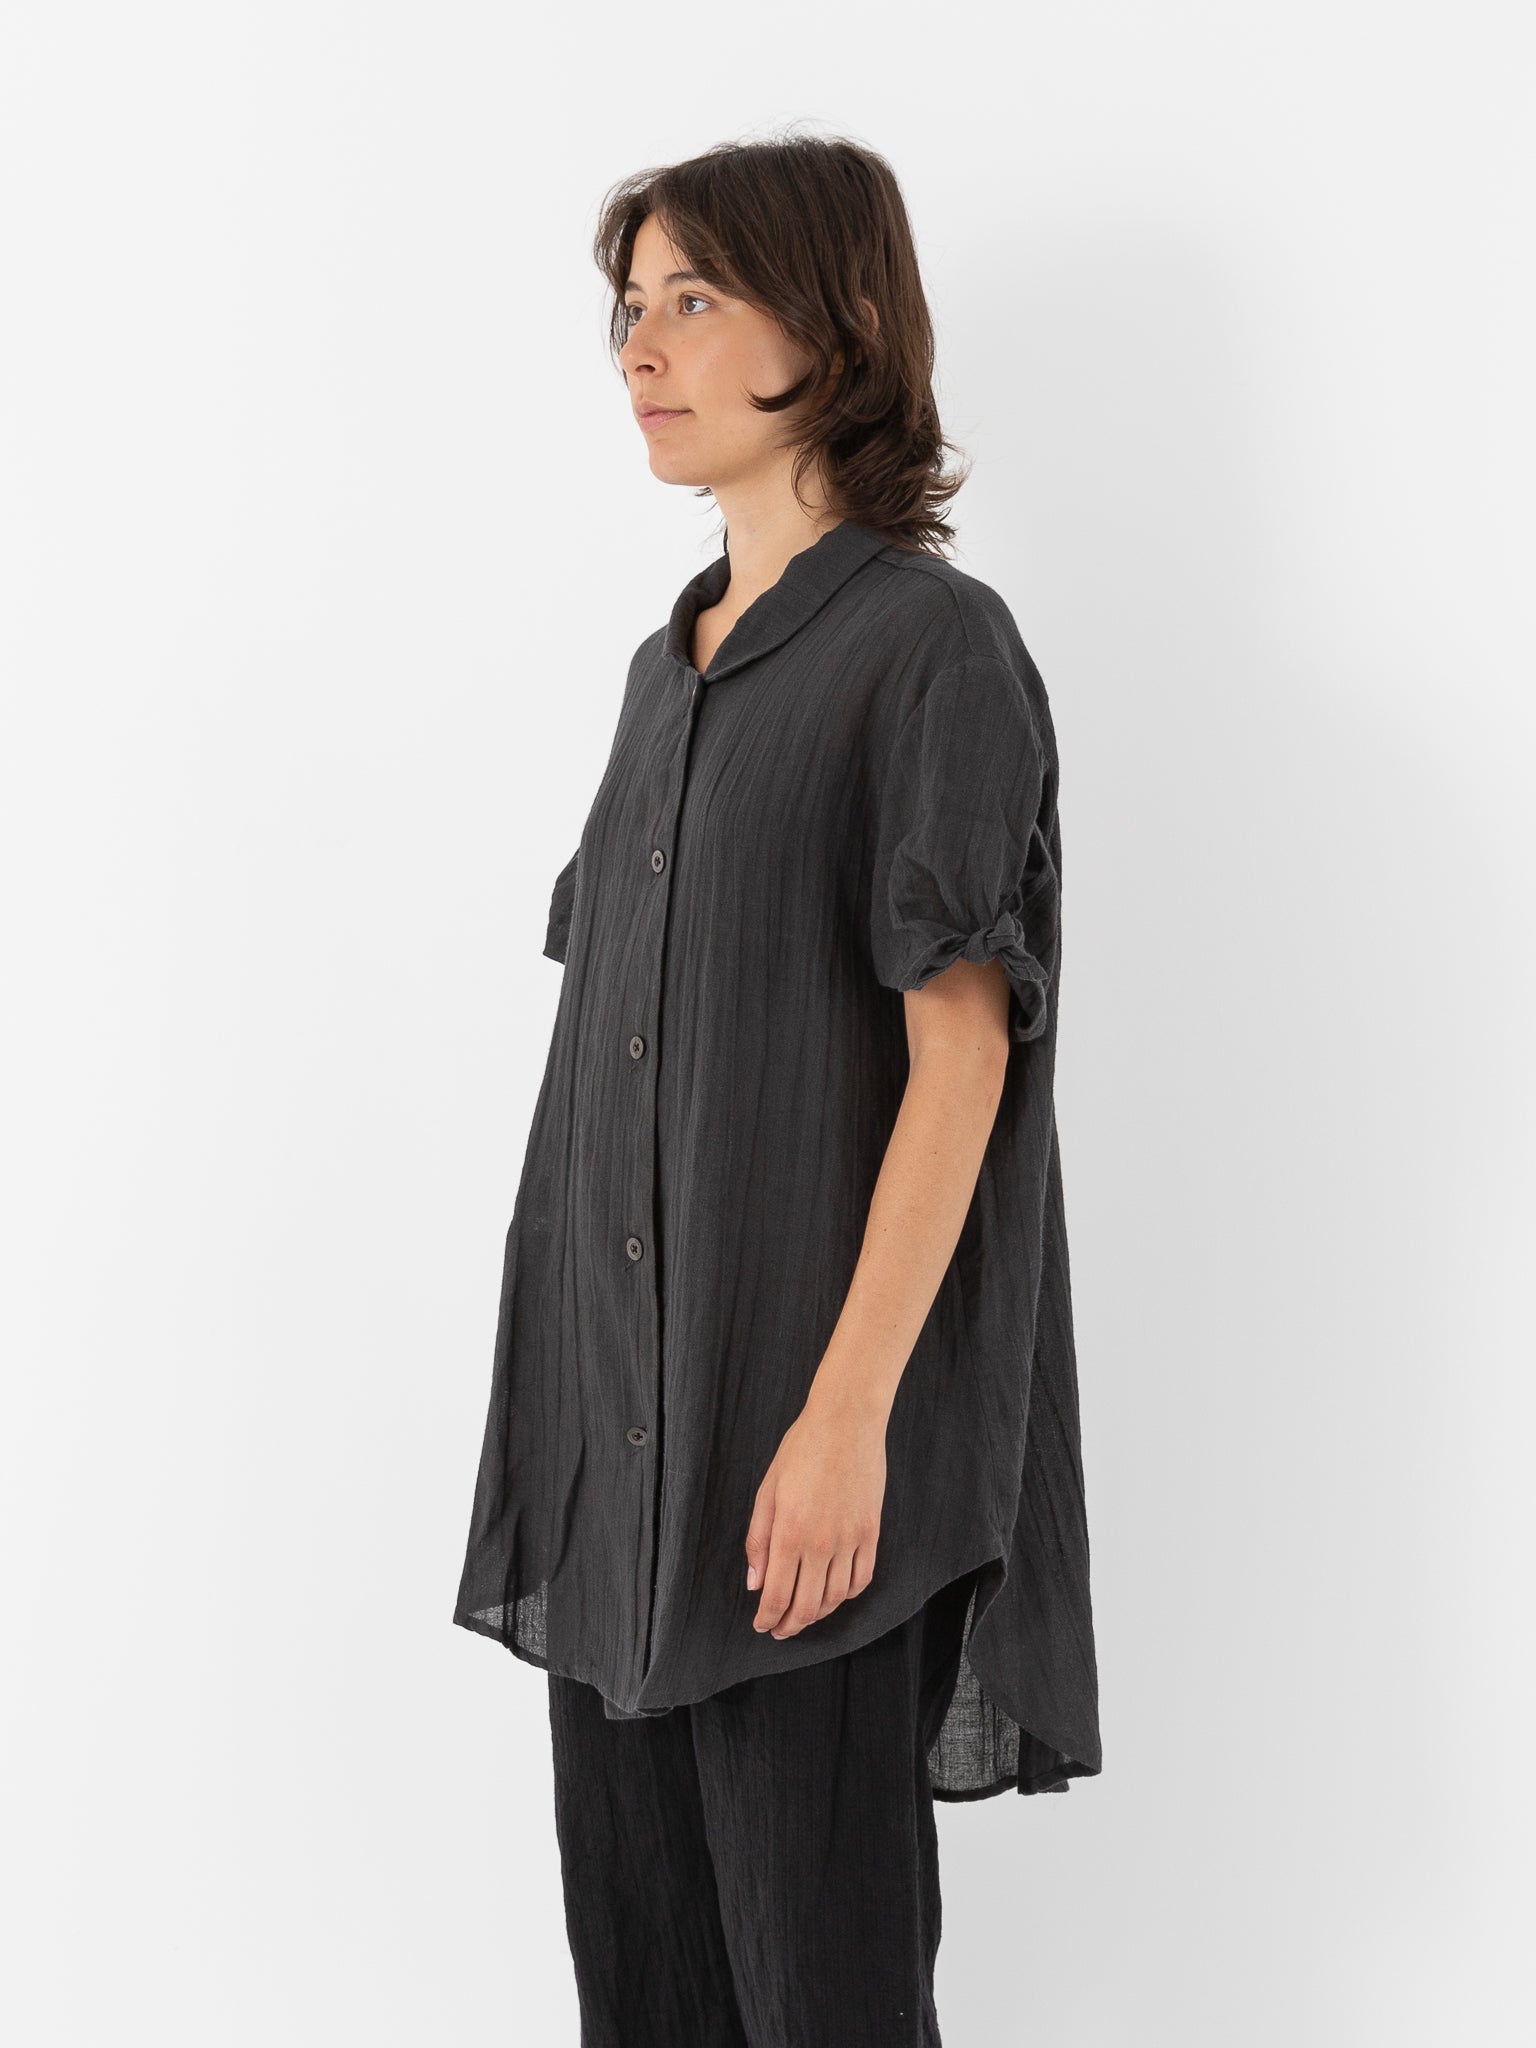 Atelier Suppan A-Line Shirt, Dark - Worthwhile